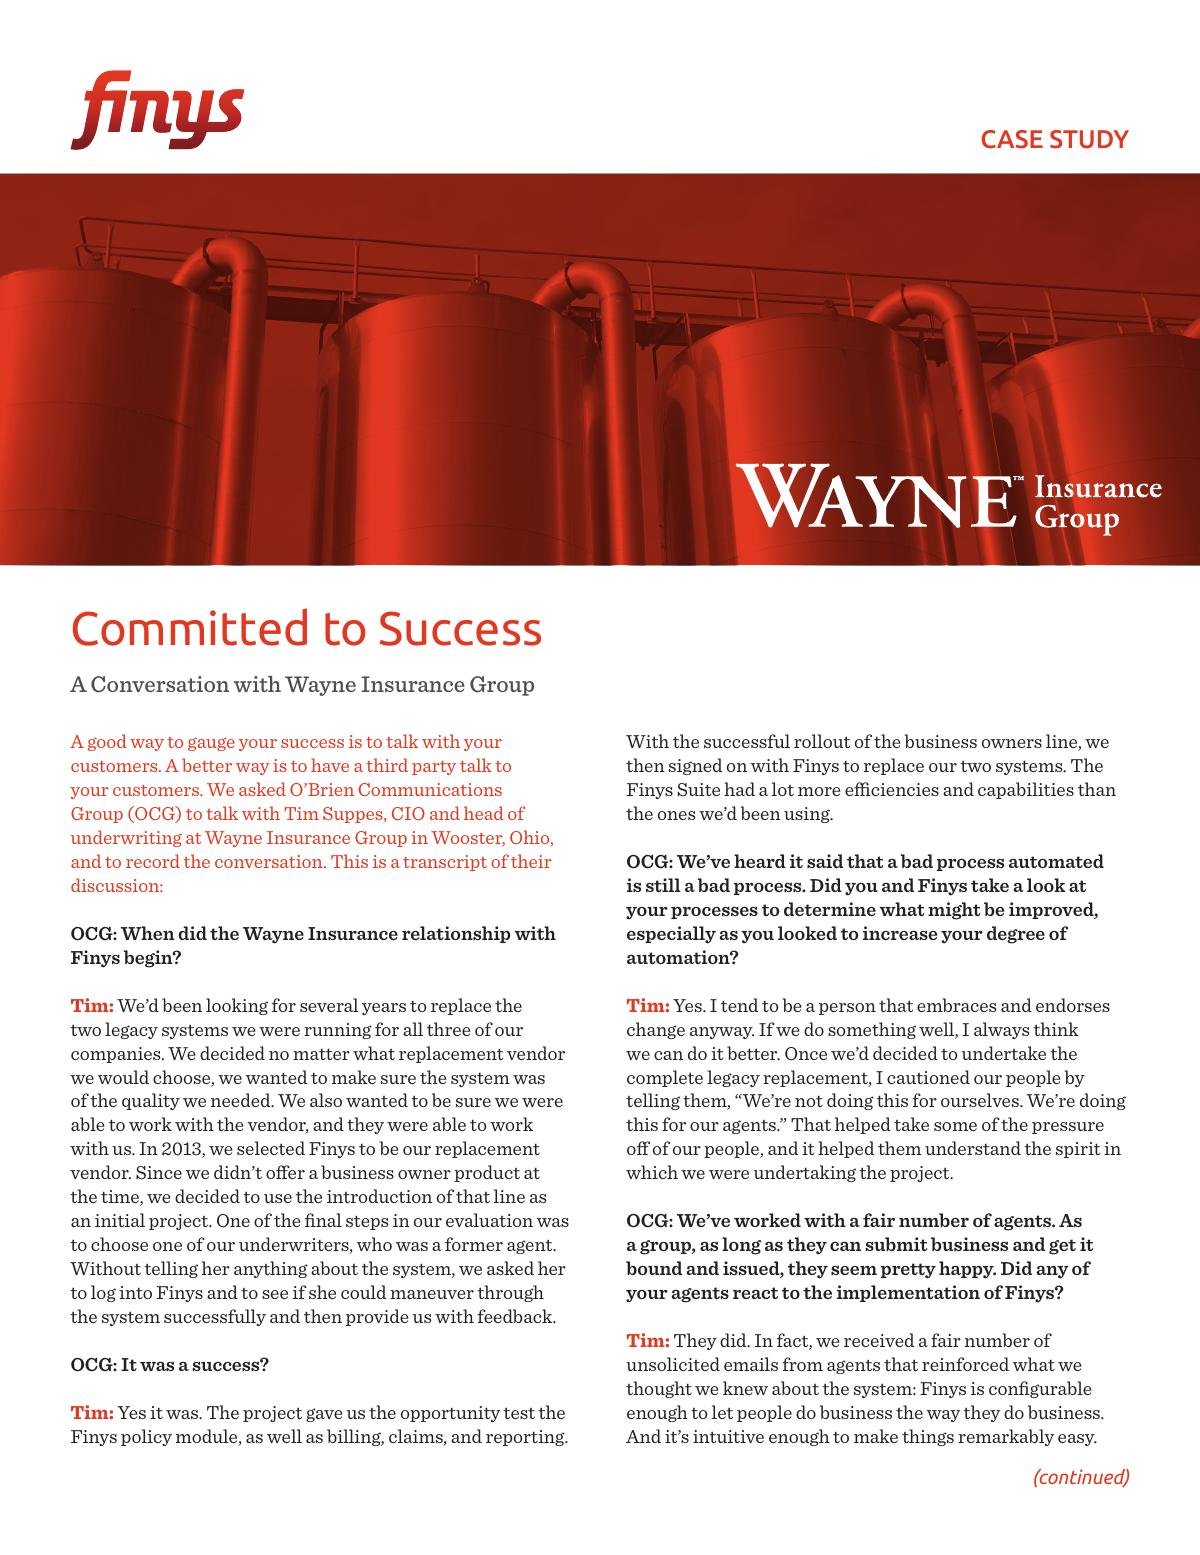 Wayne Insurance Group Case Study